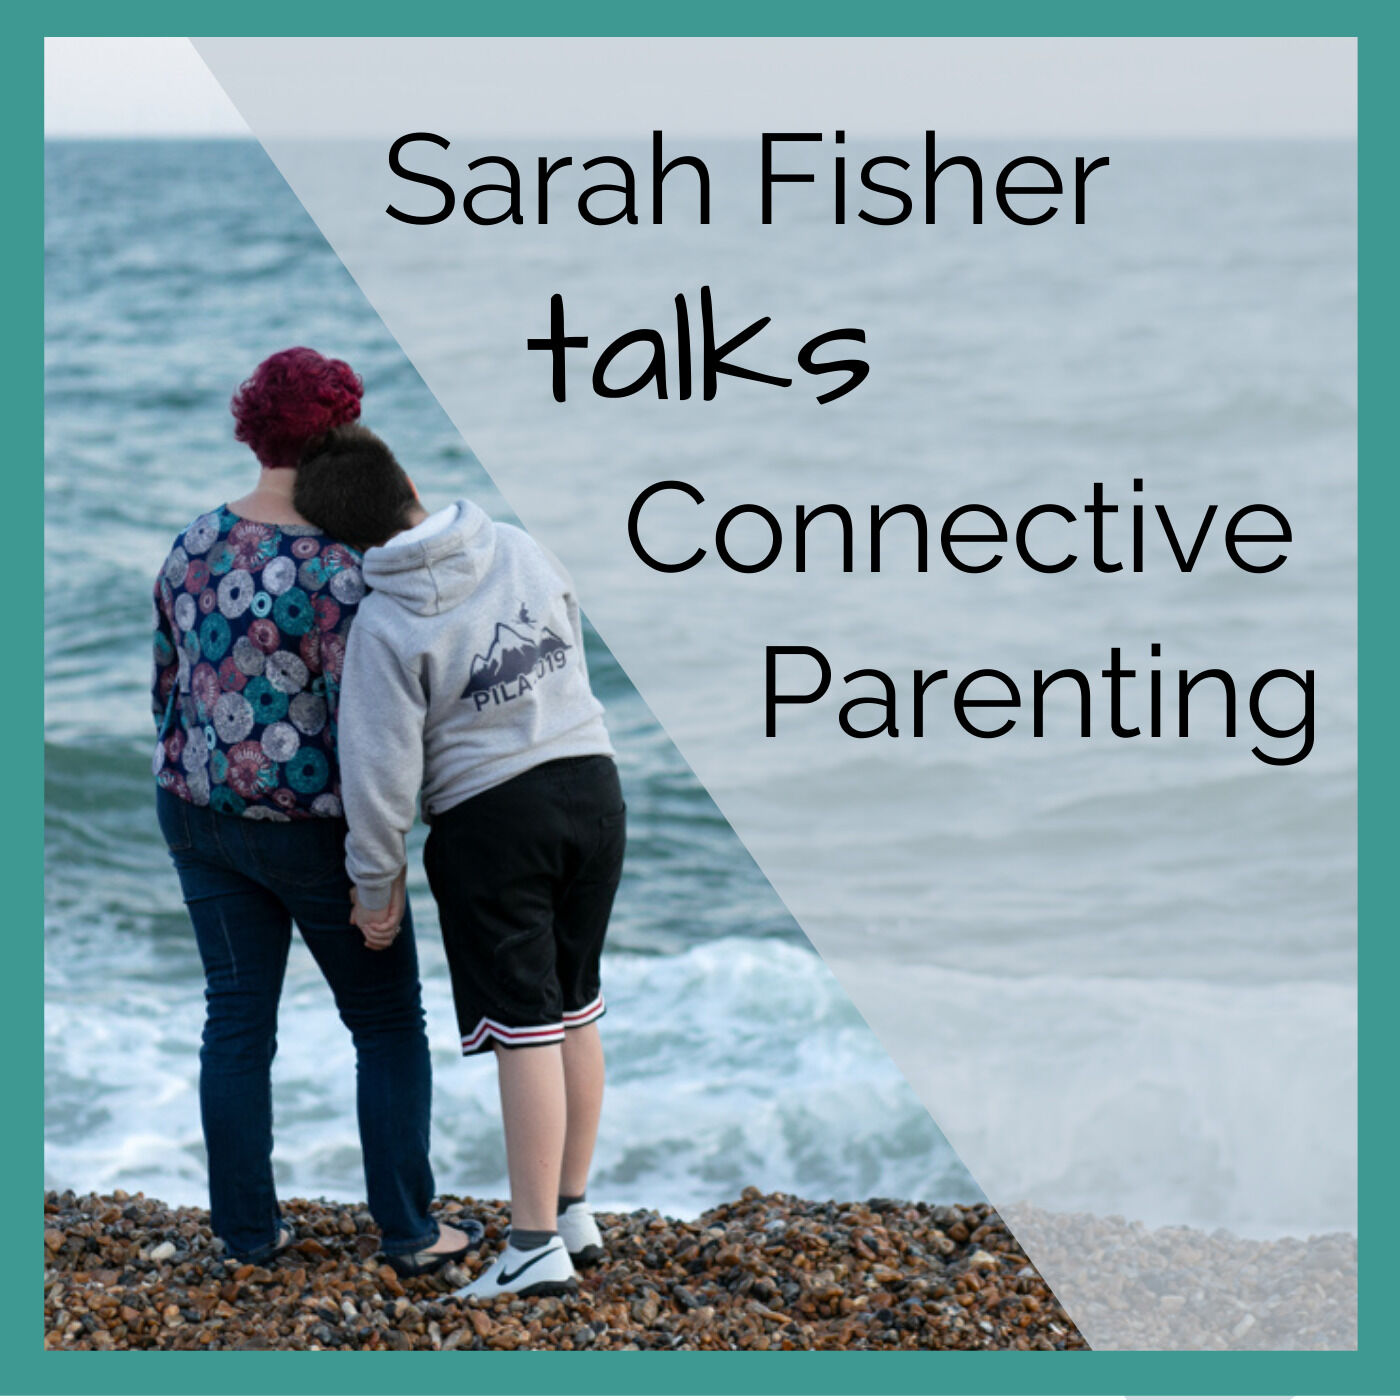 Sarah Fisher talks Connective Parenting